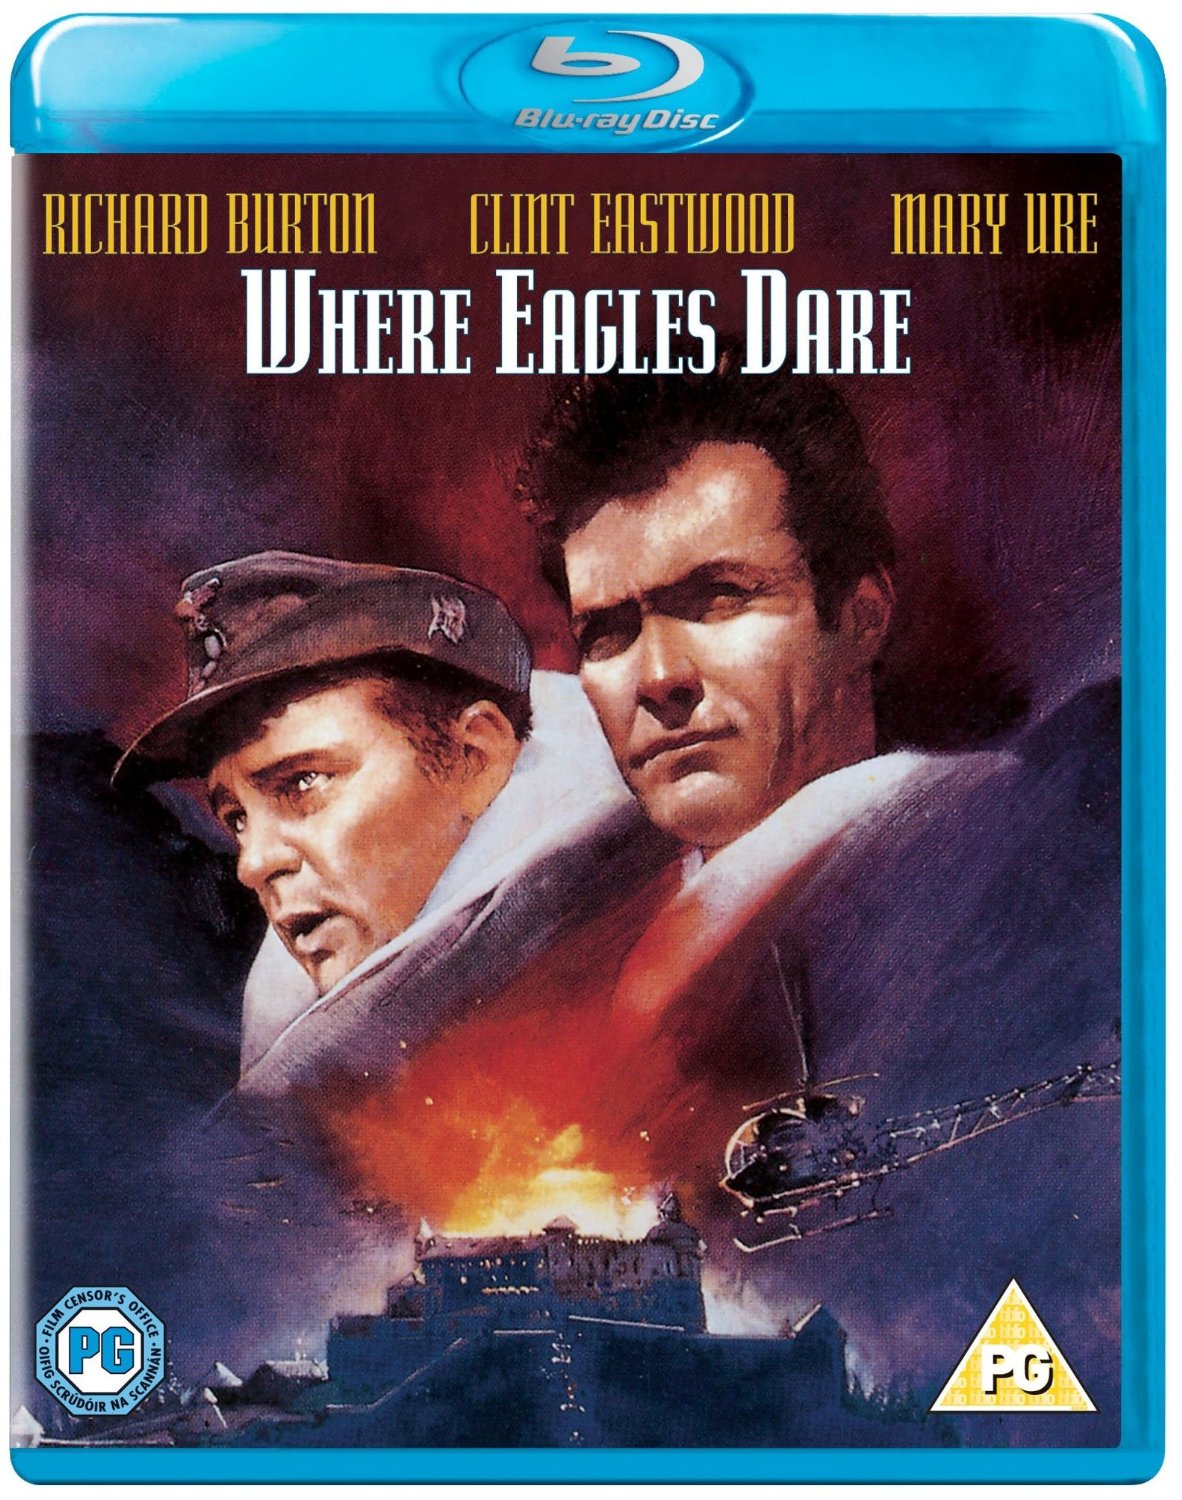 Stiahni si Blu-ray Filmy Kam orli neletaji / Where Eagles Dare (1968)(CZ/EN)[Blu-ray][1080pHD] = CSFD 83%